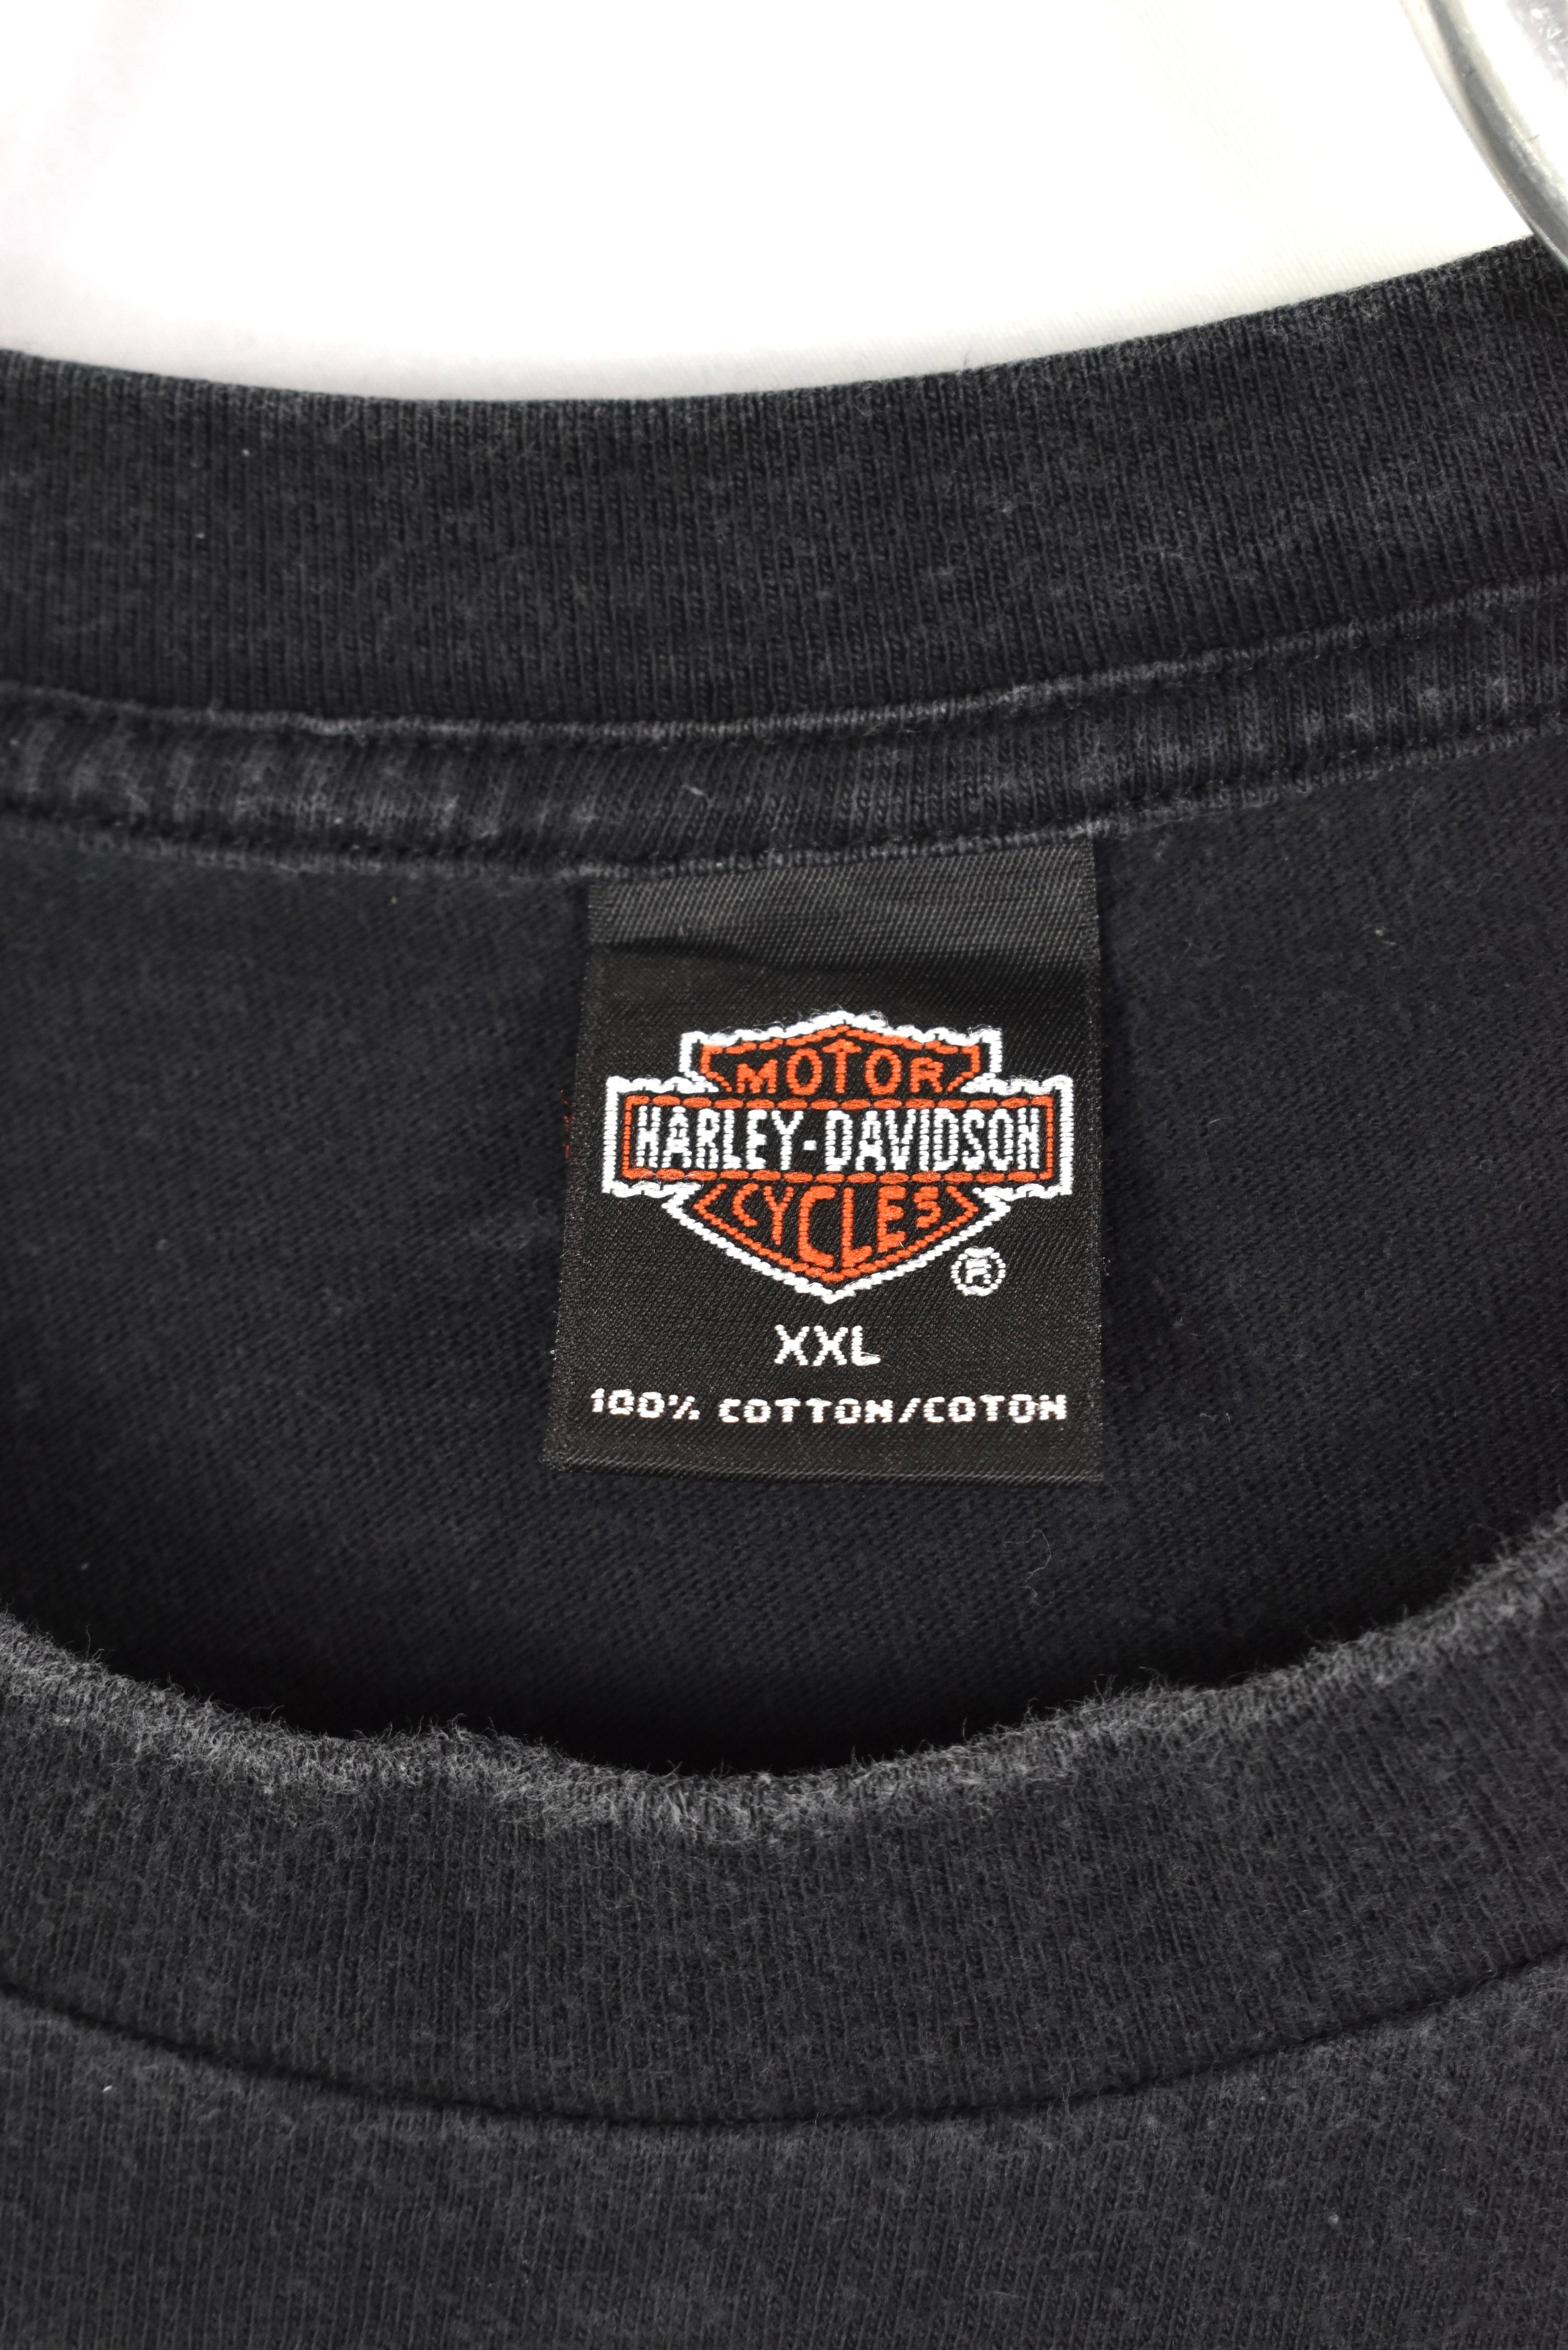 Vintage Harley Davidson shirt, 1999 motorcycle biker graphic tee - XXL, black HARLEY DAVIDSON